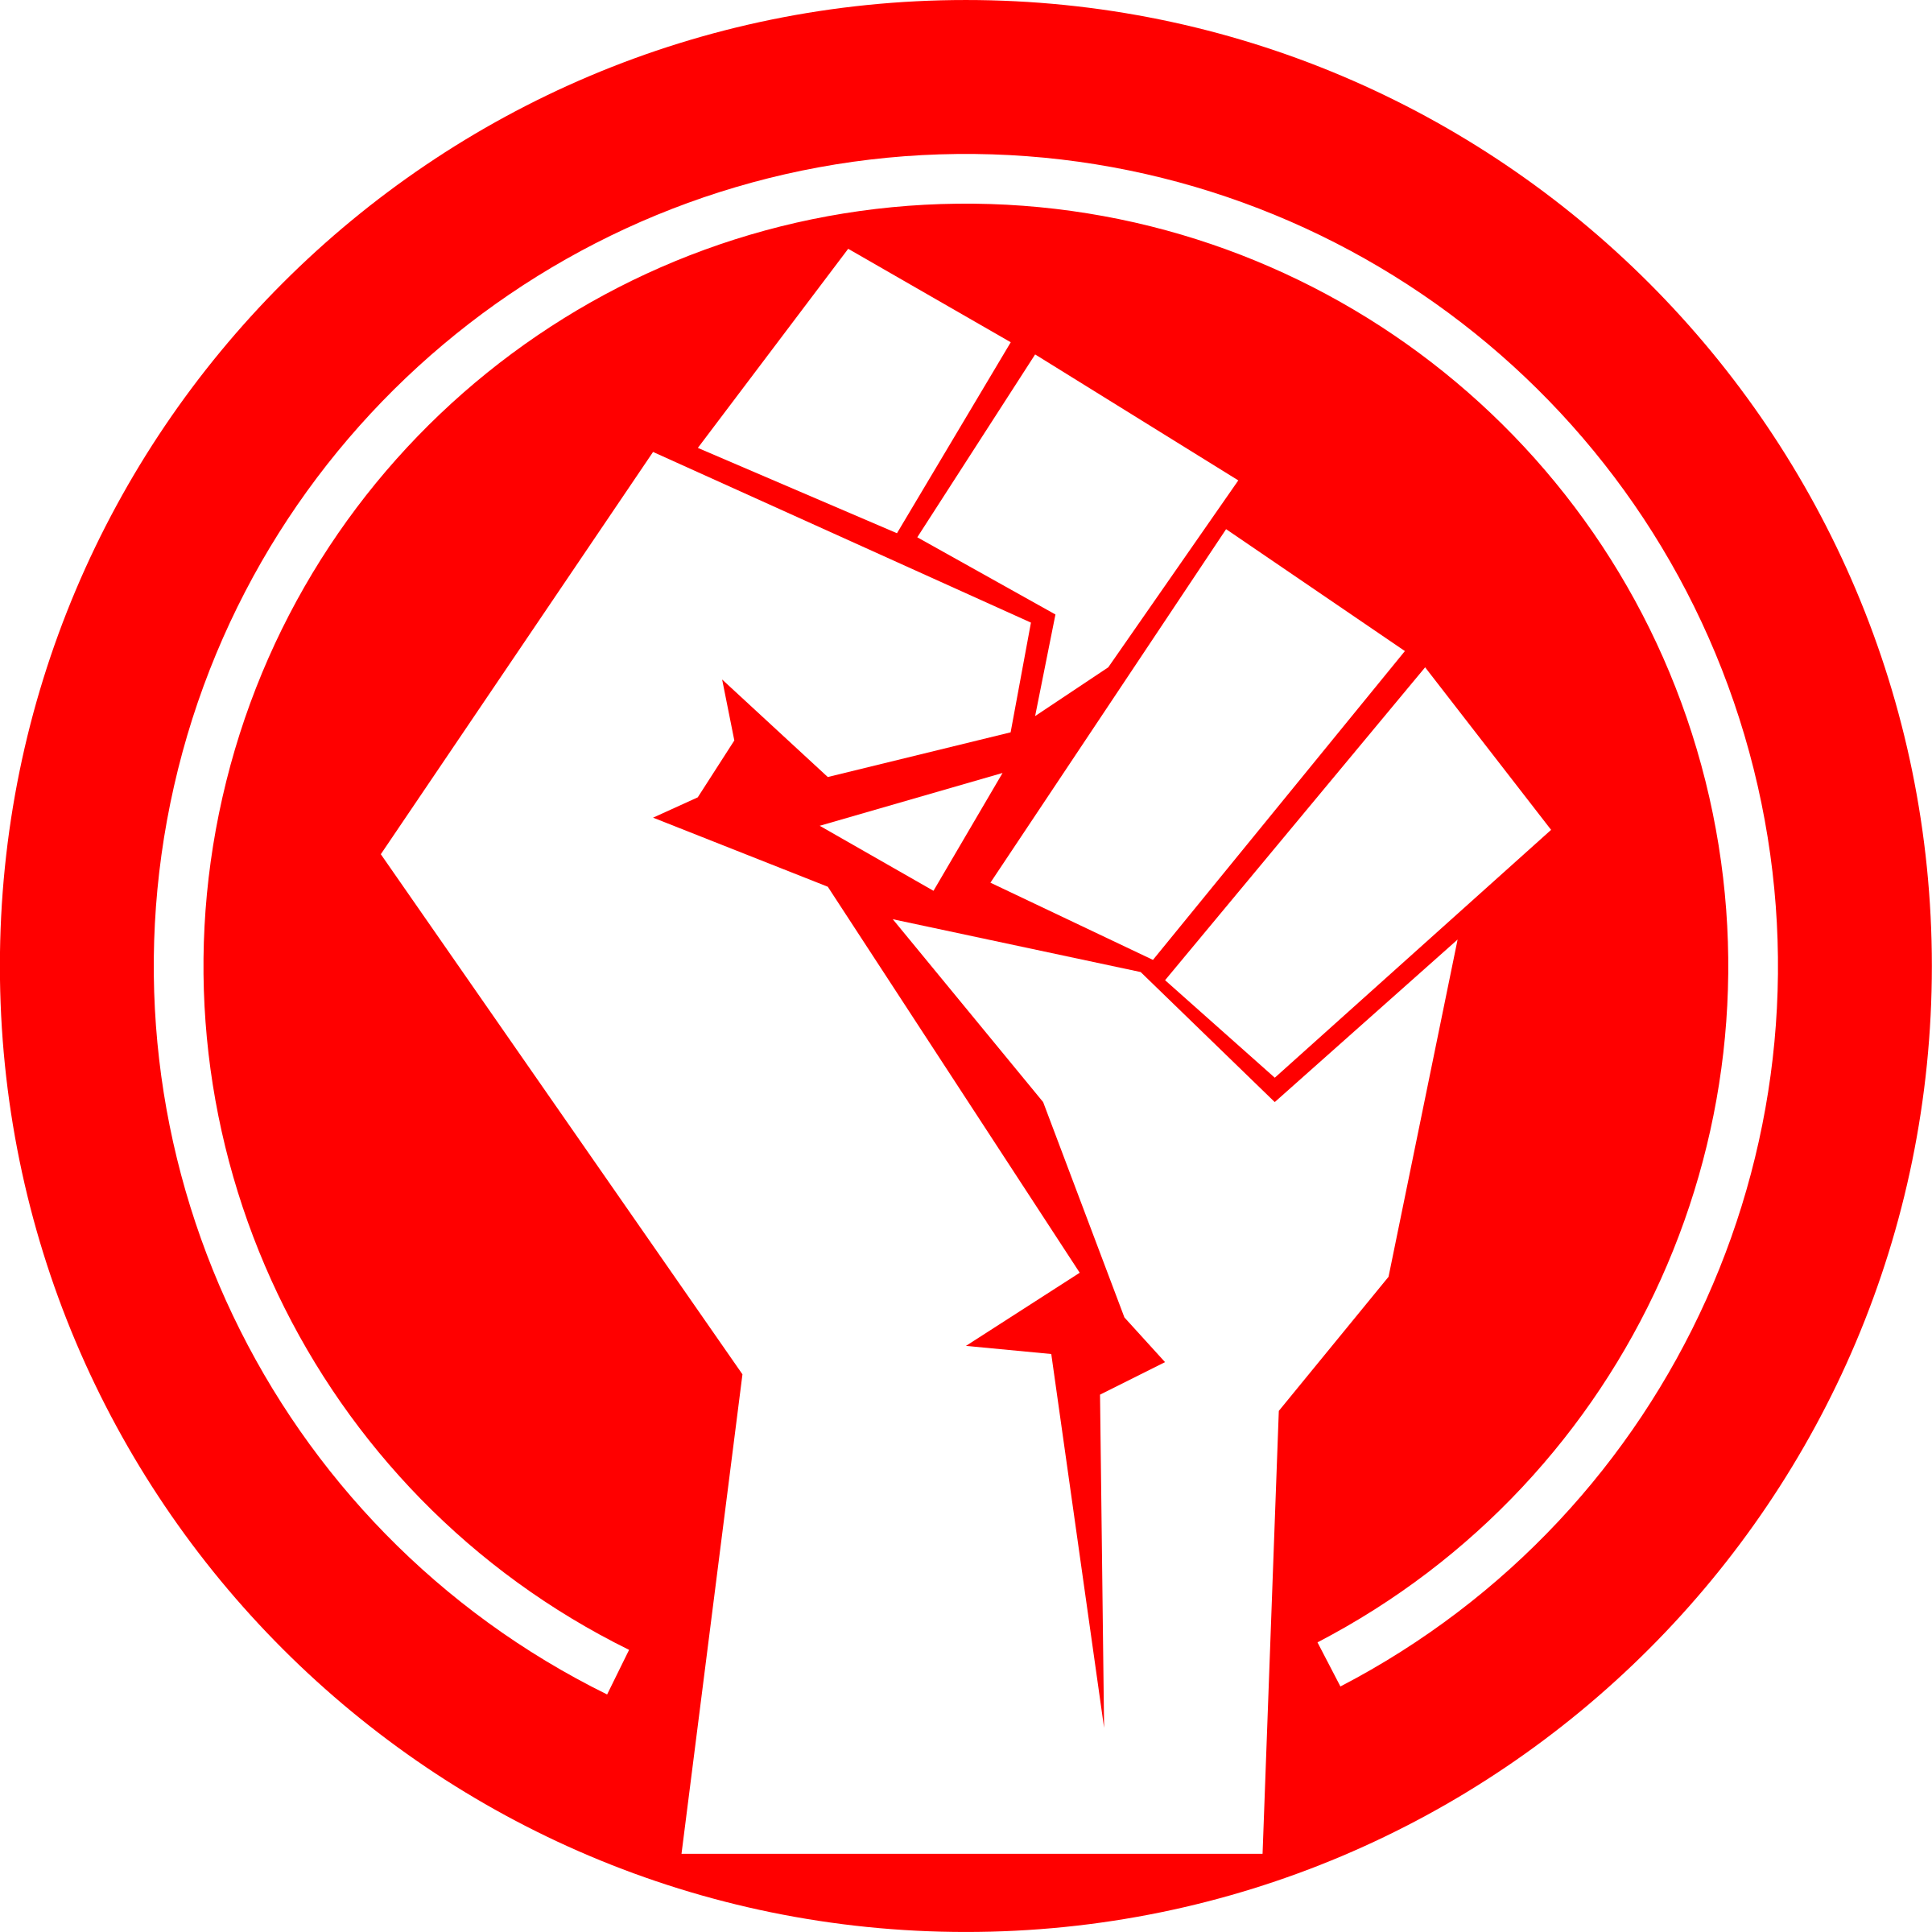 Clipart - Fist logo